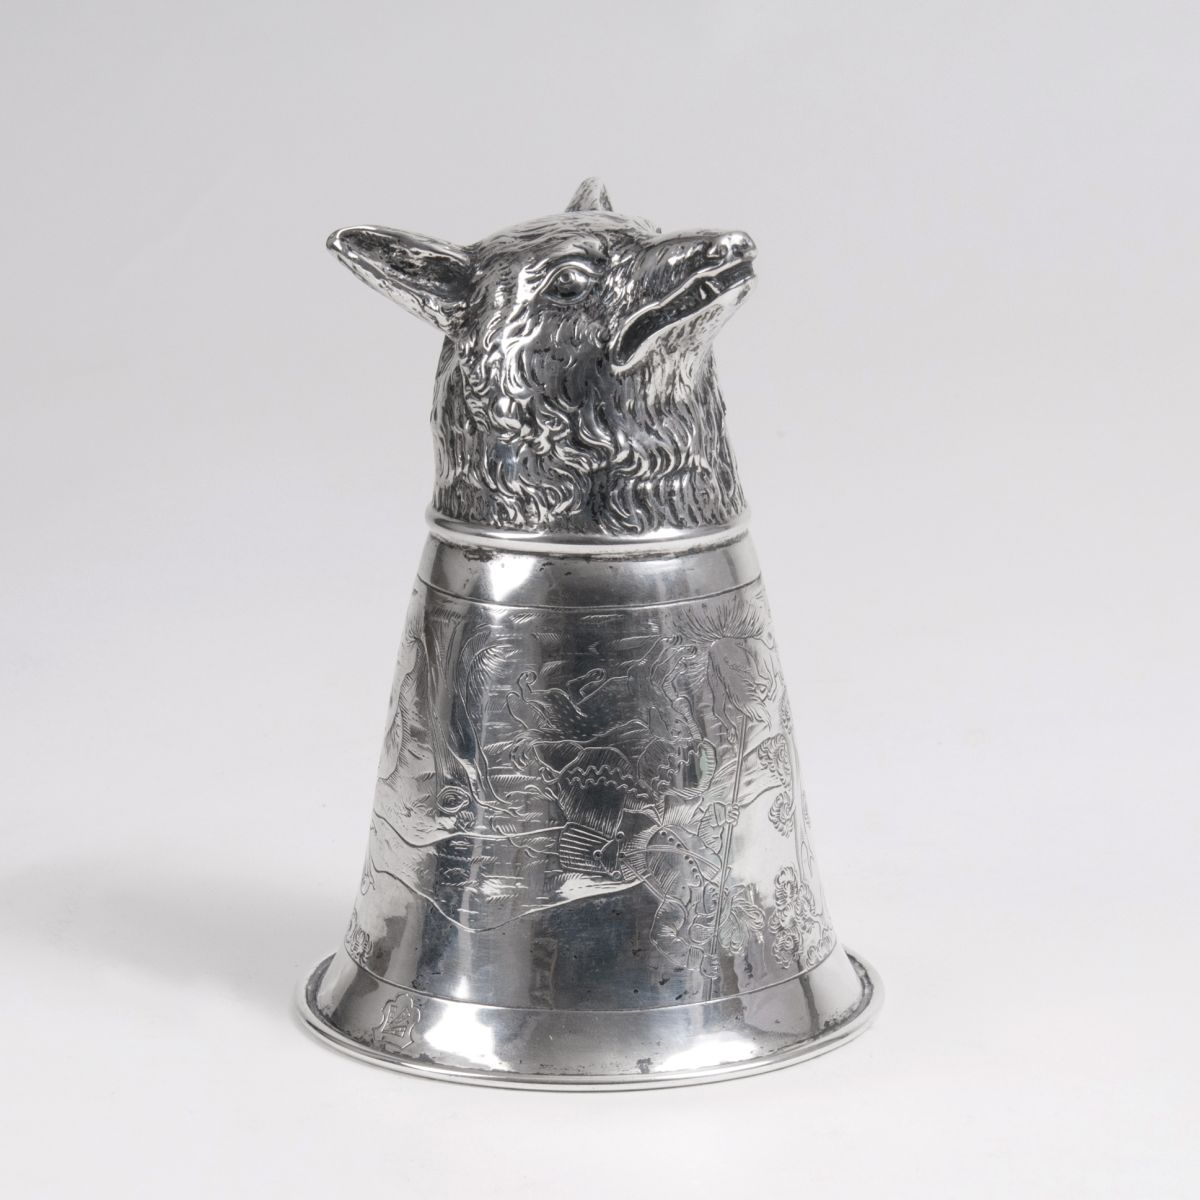 An antique stirrup cup 'fox'